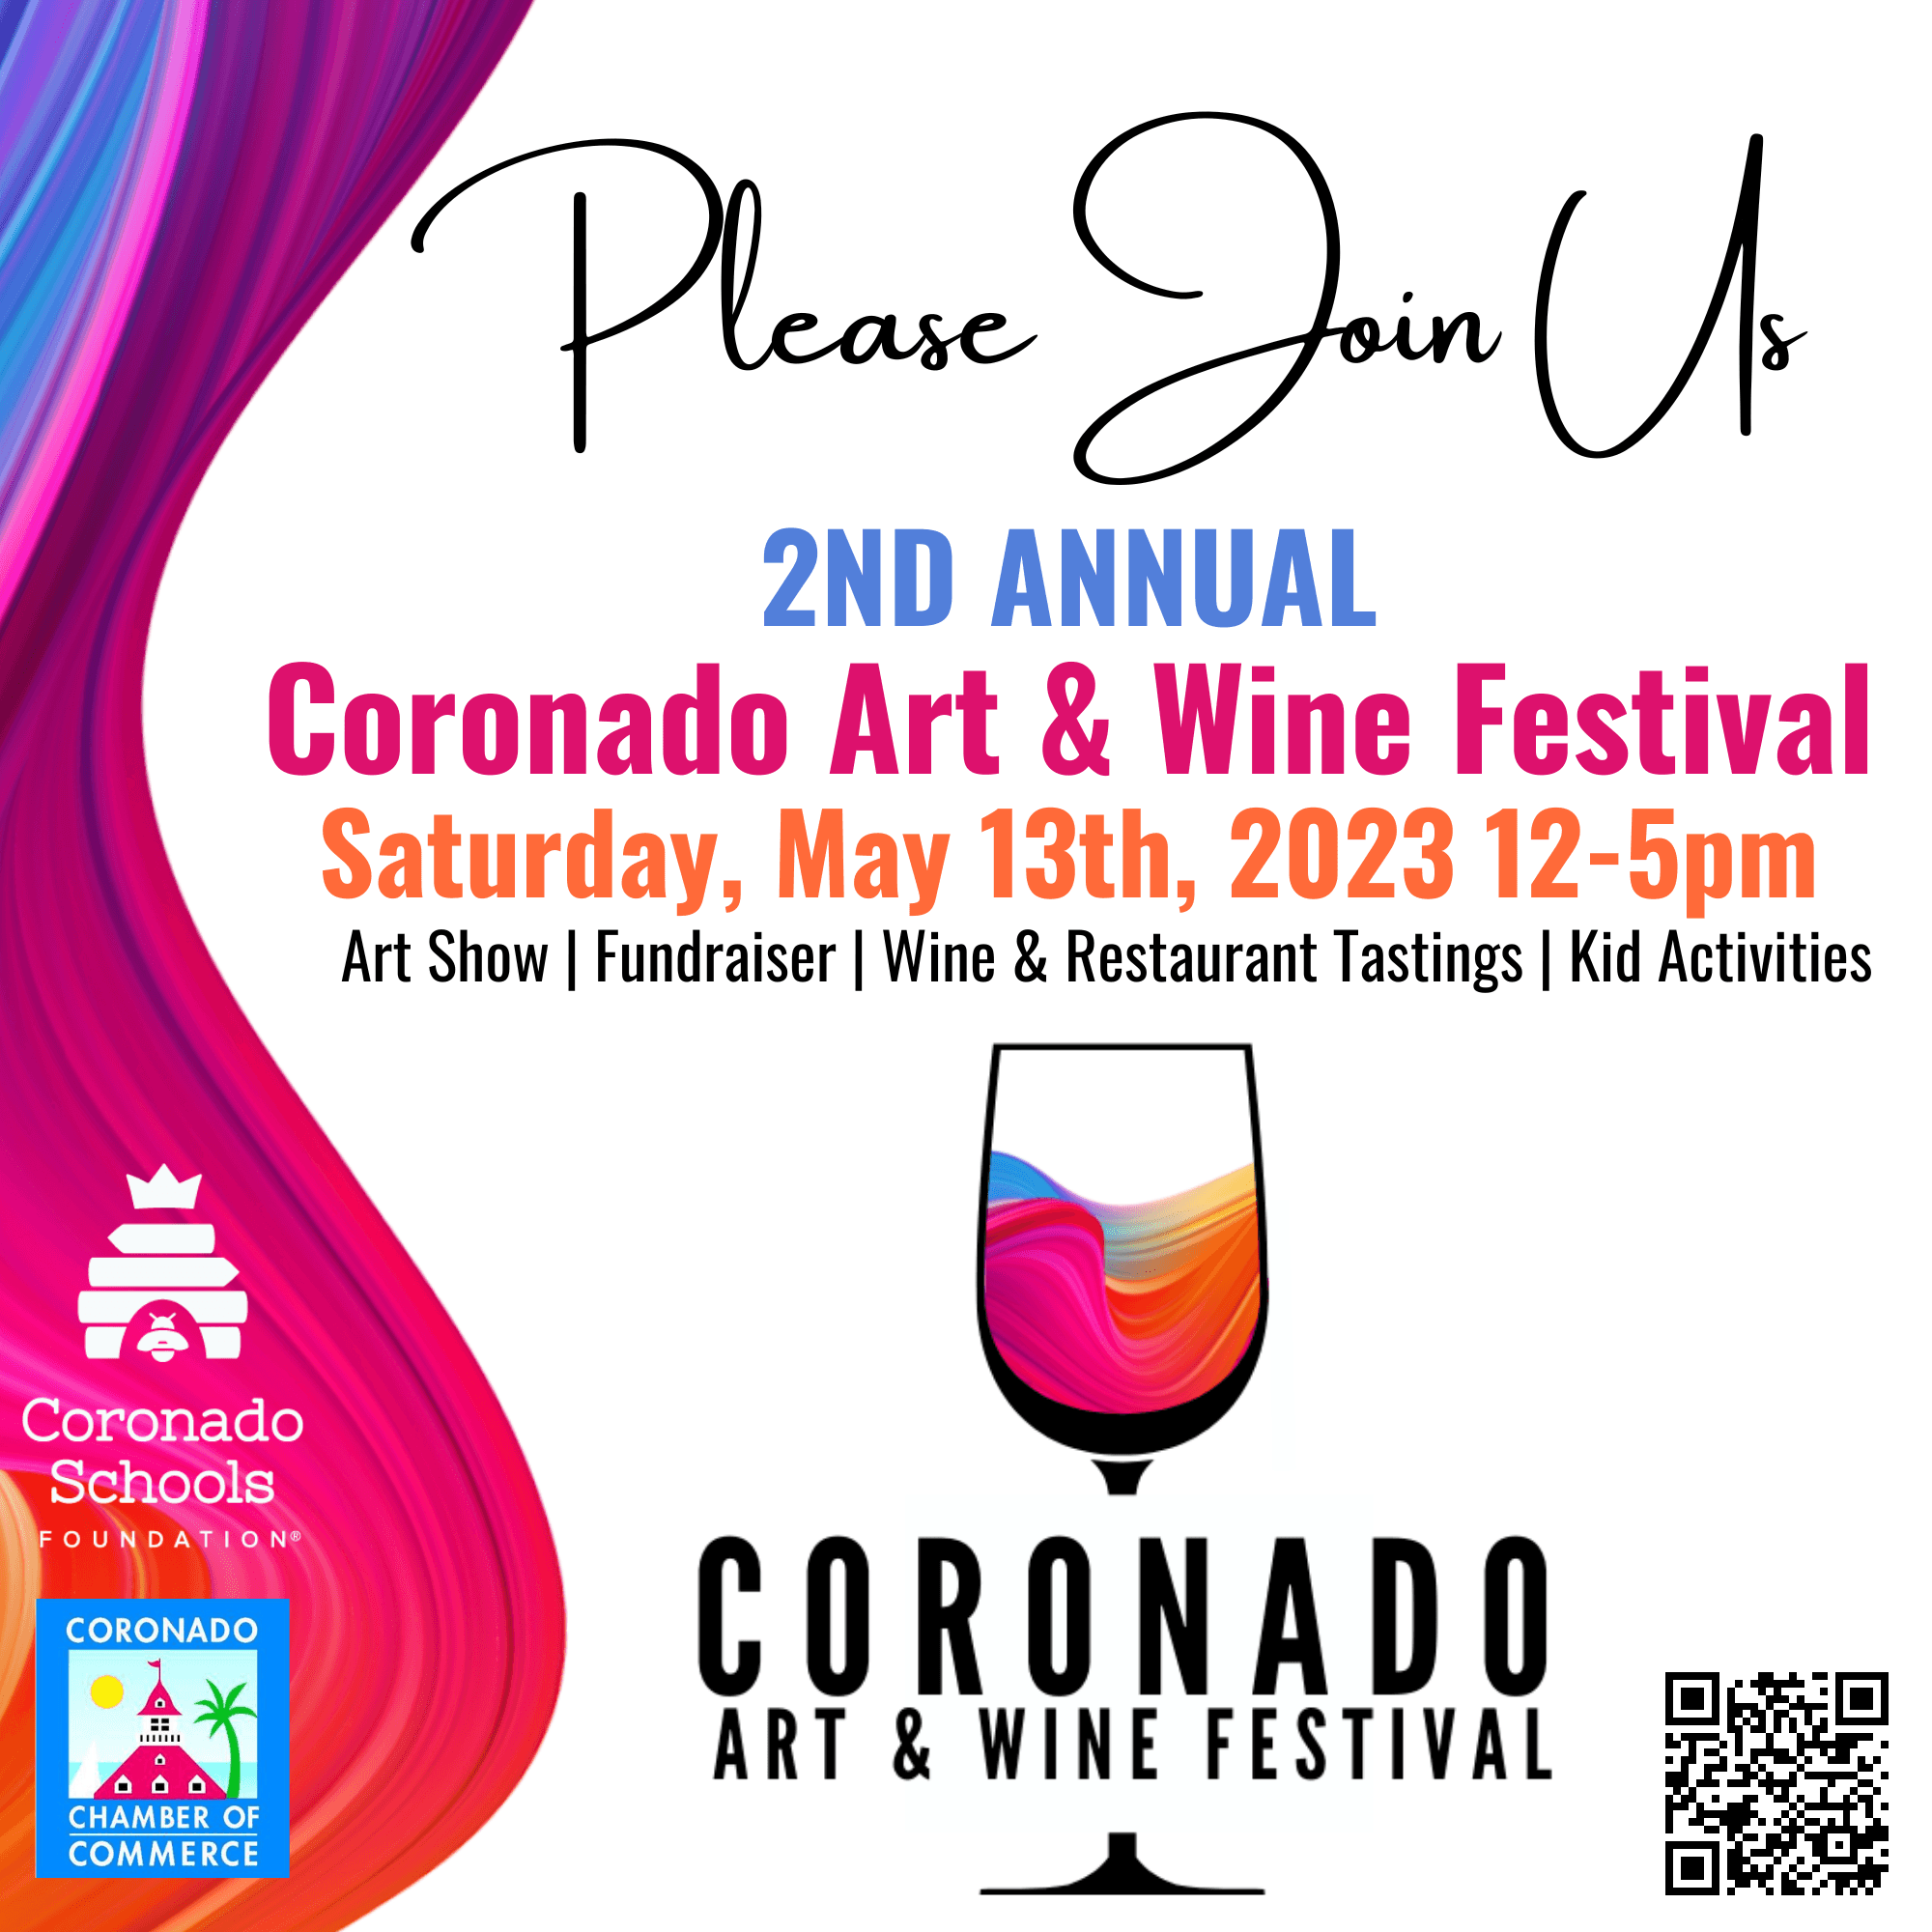 Back by Popular Demand: Coronado Art & Wine Festival Returns for a Second Year